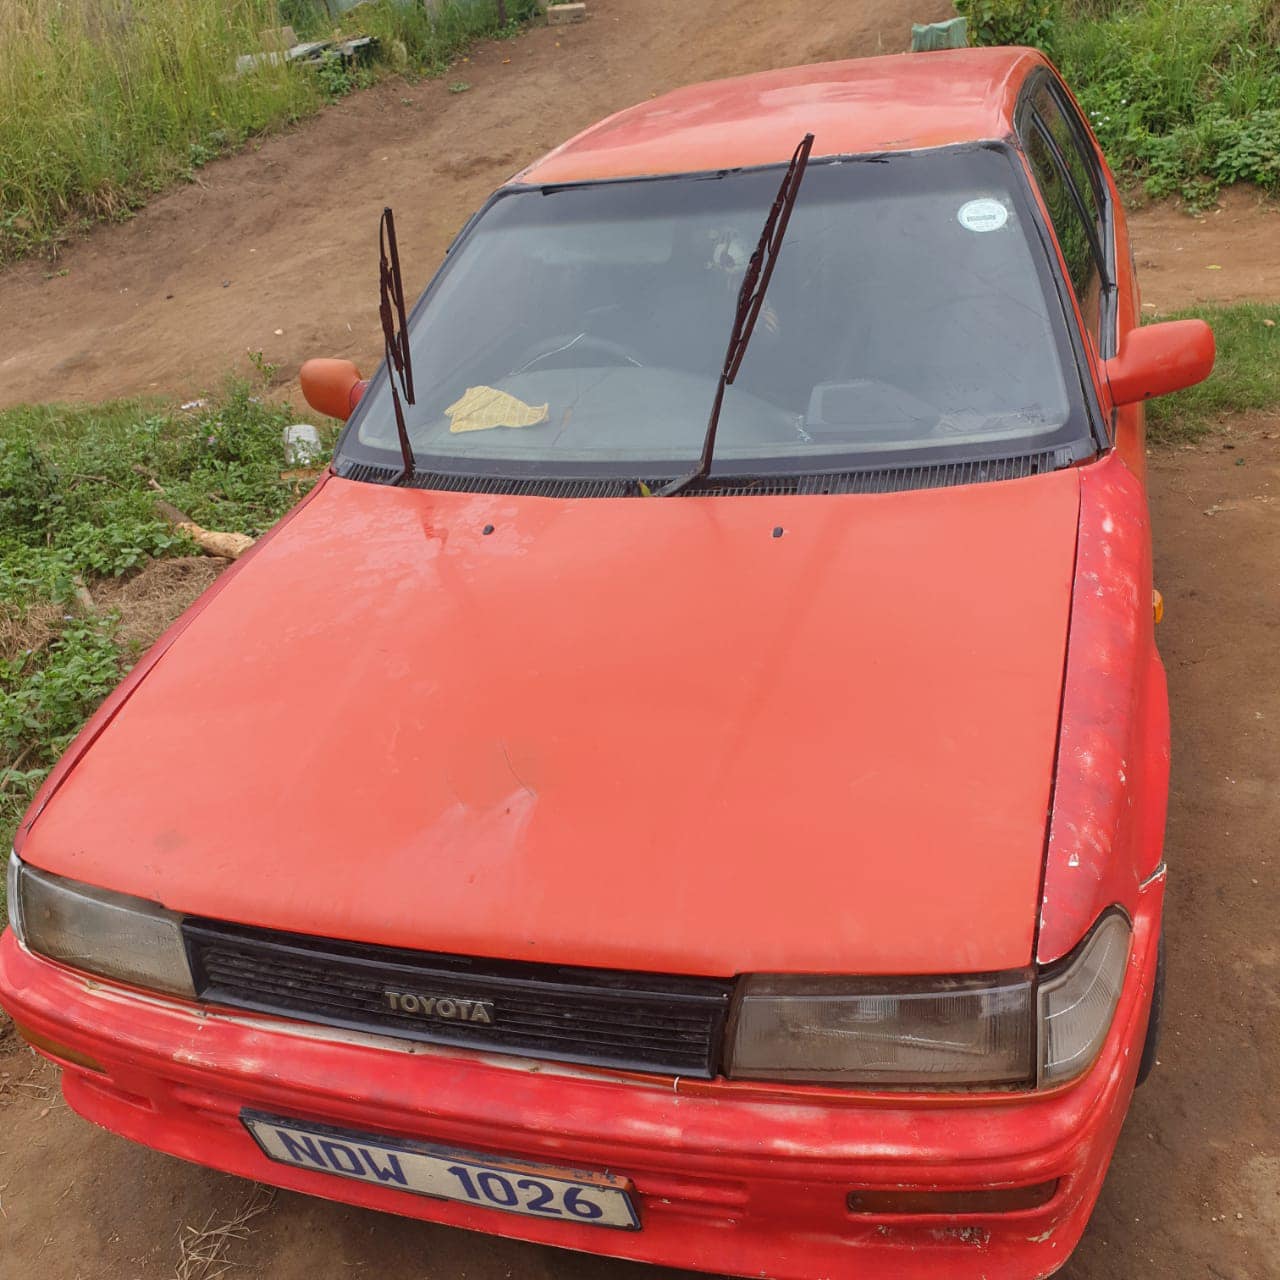 Theft of vehicle in Ndwedwe